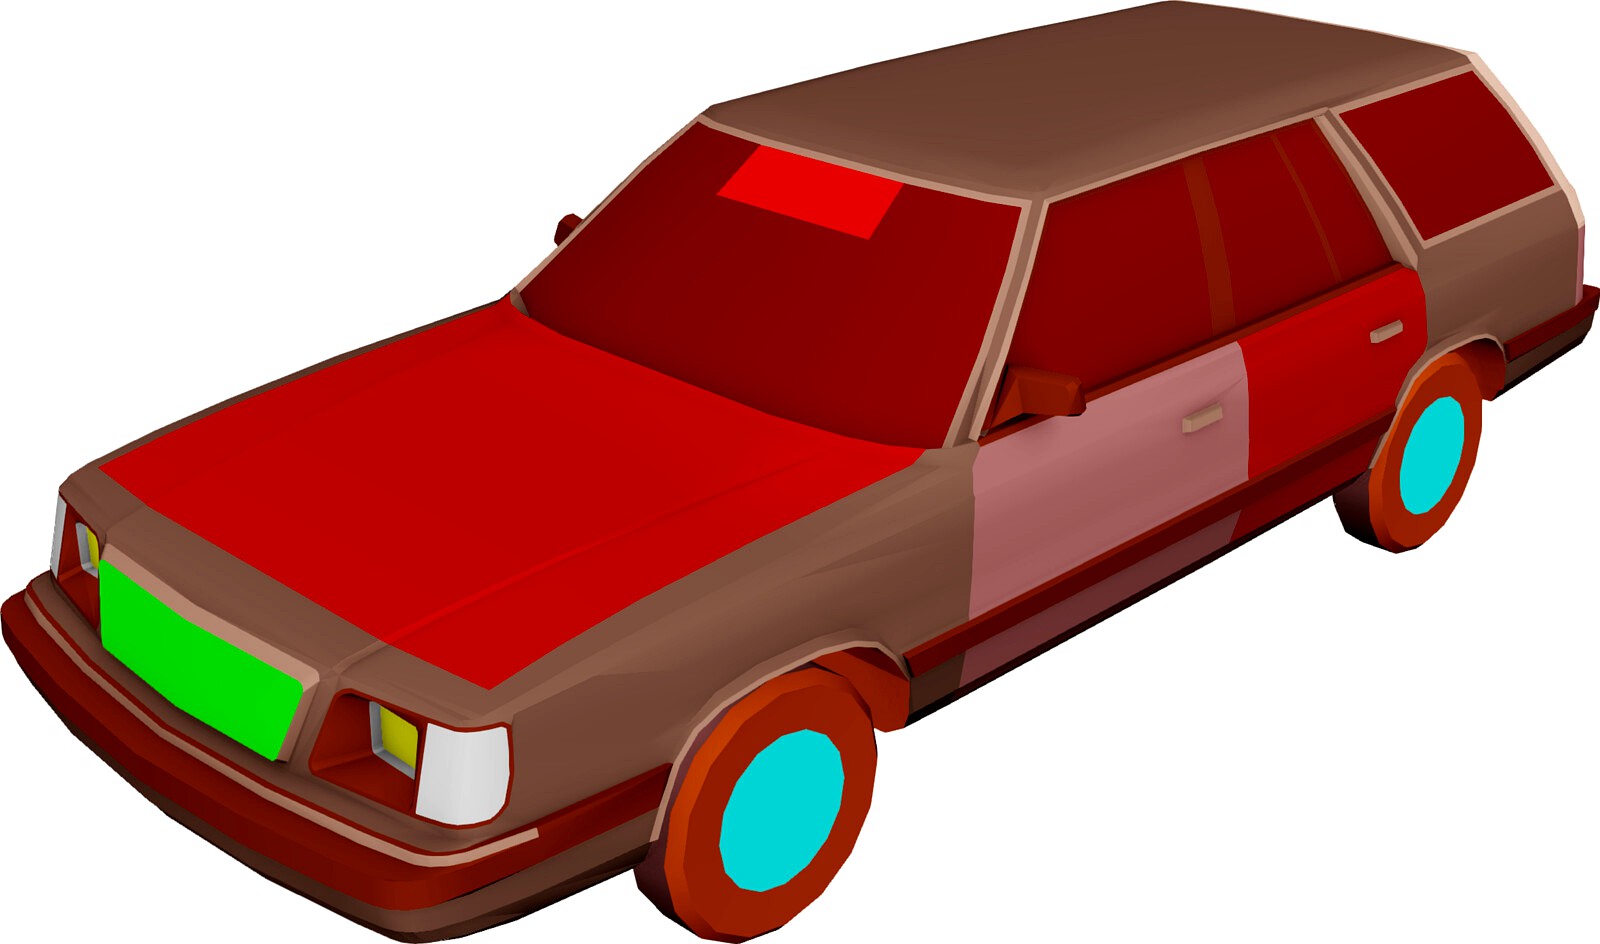 Plymouth Reliant Wagon (1985)